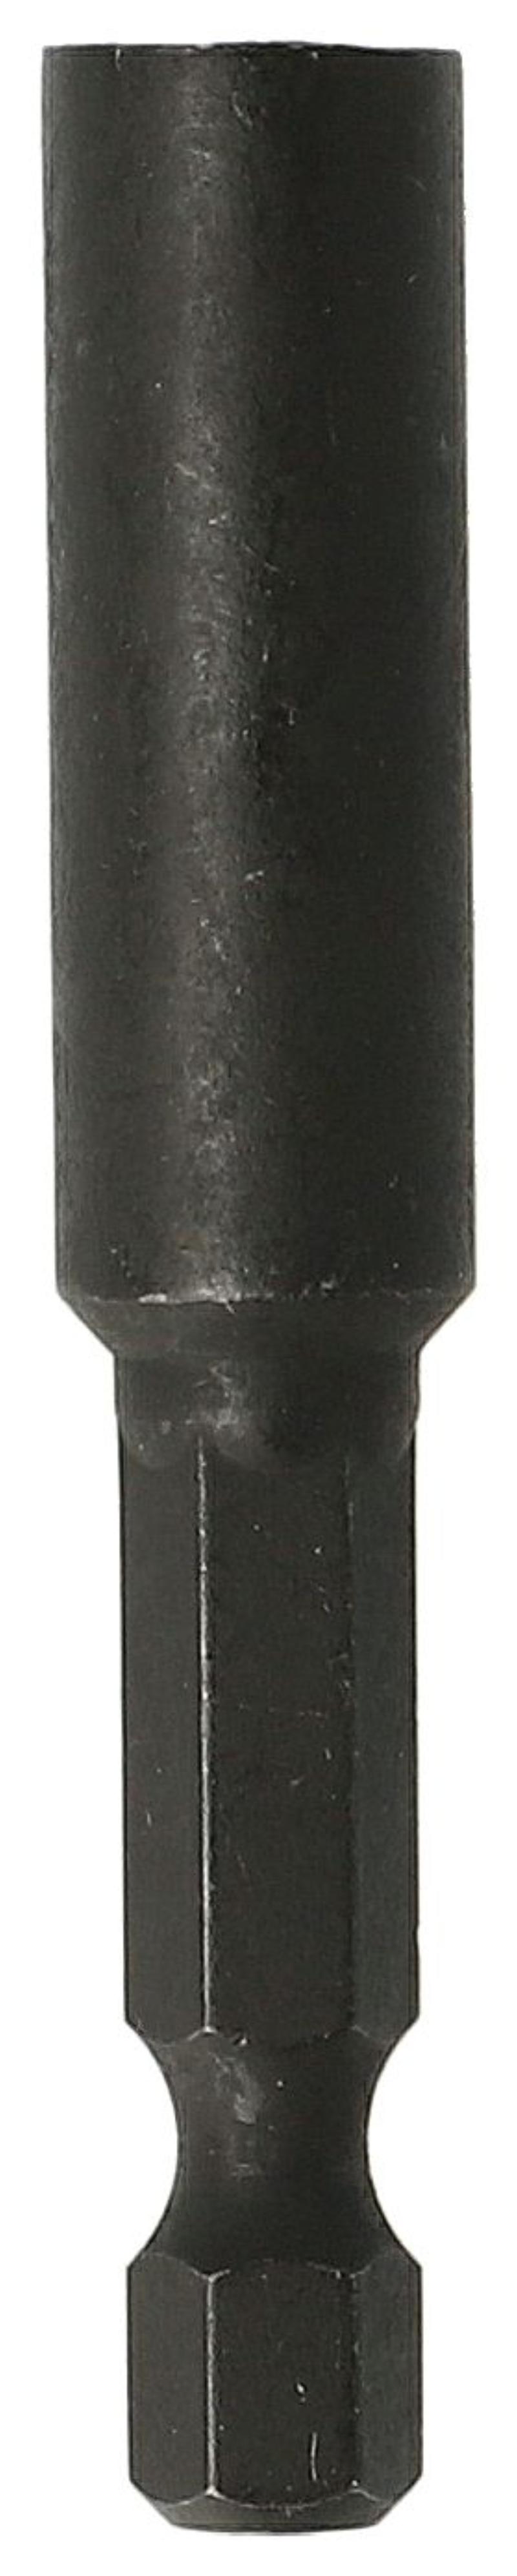 Heller bit holder 60mm, magnetic